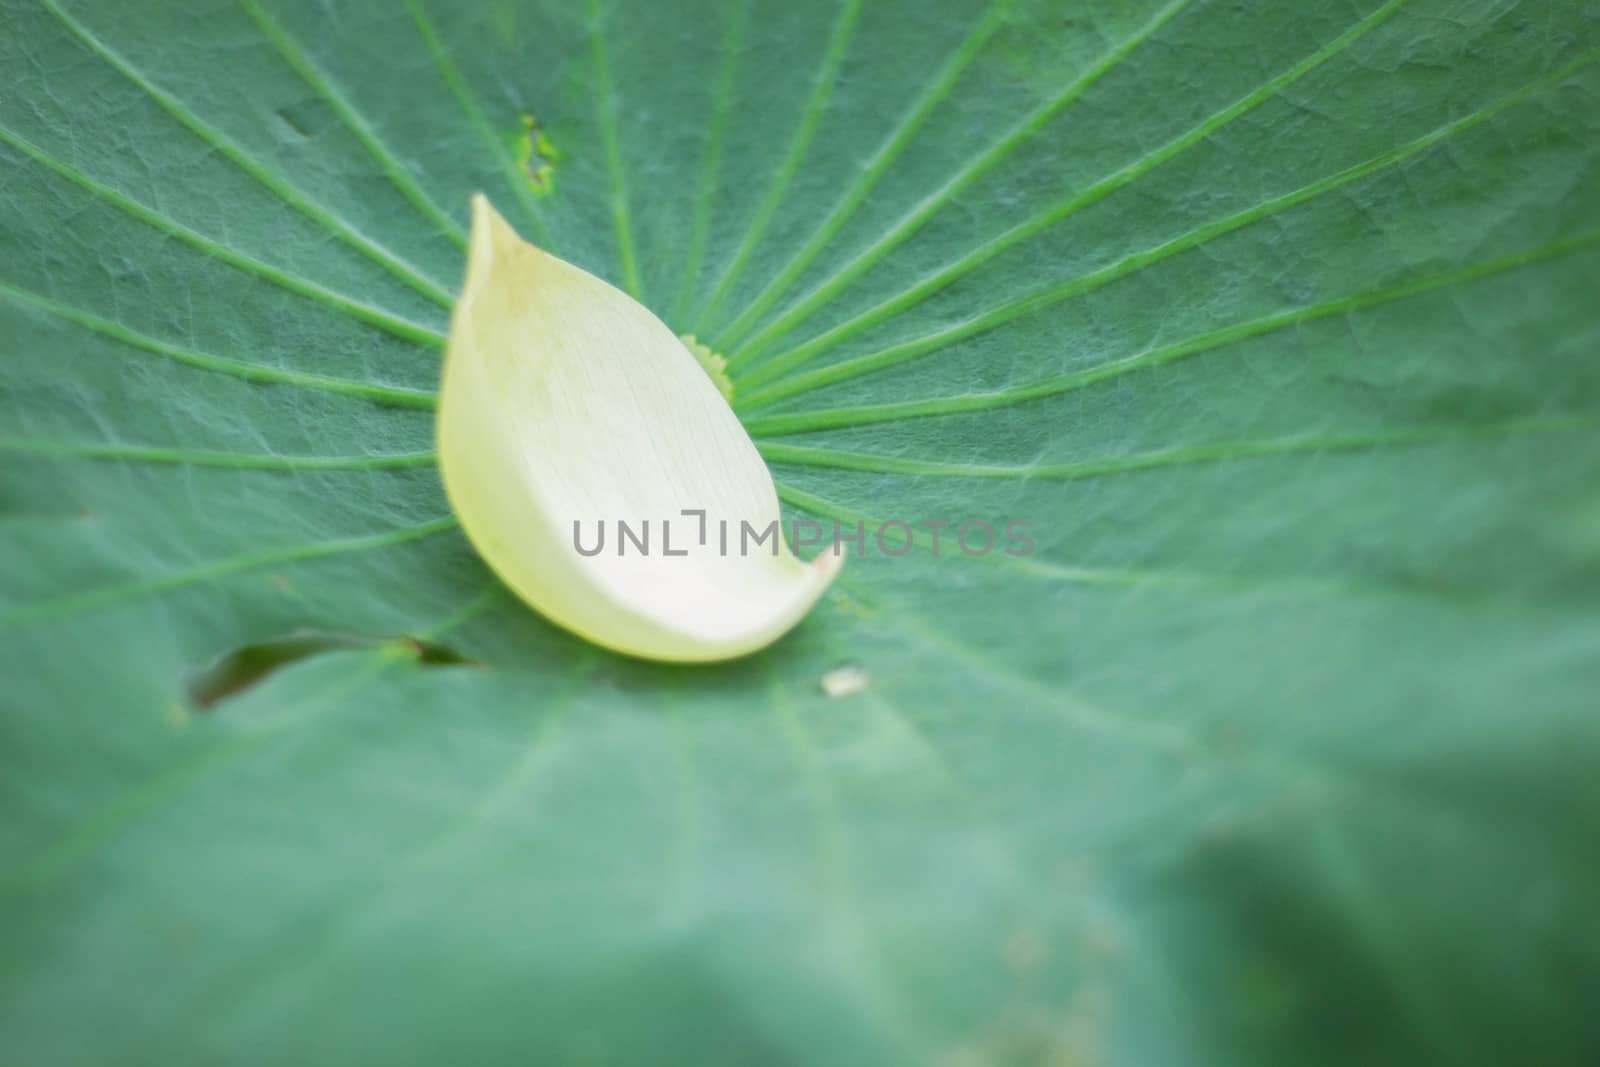 petals on lotus leaf. by start08